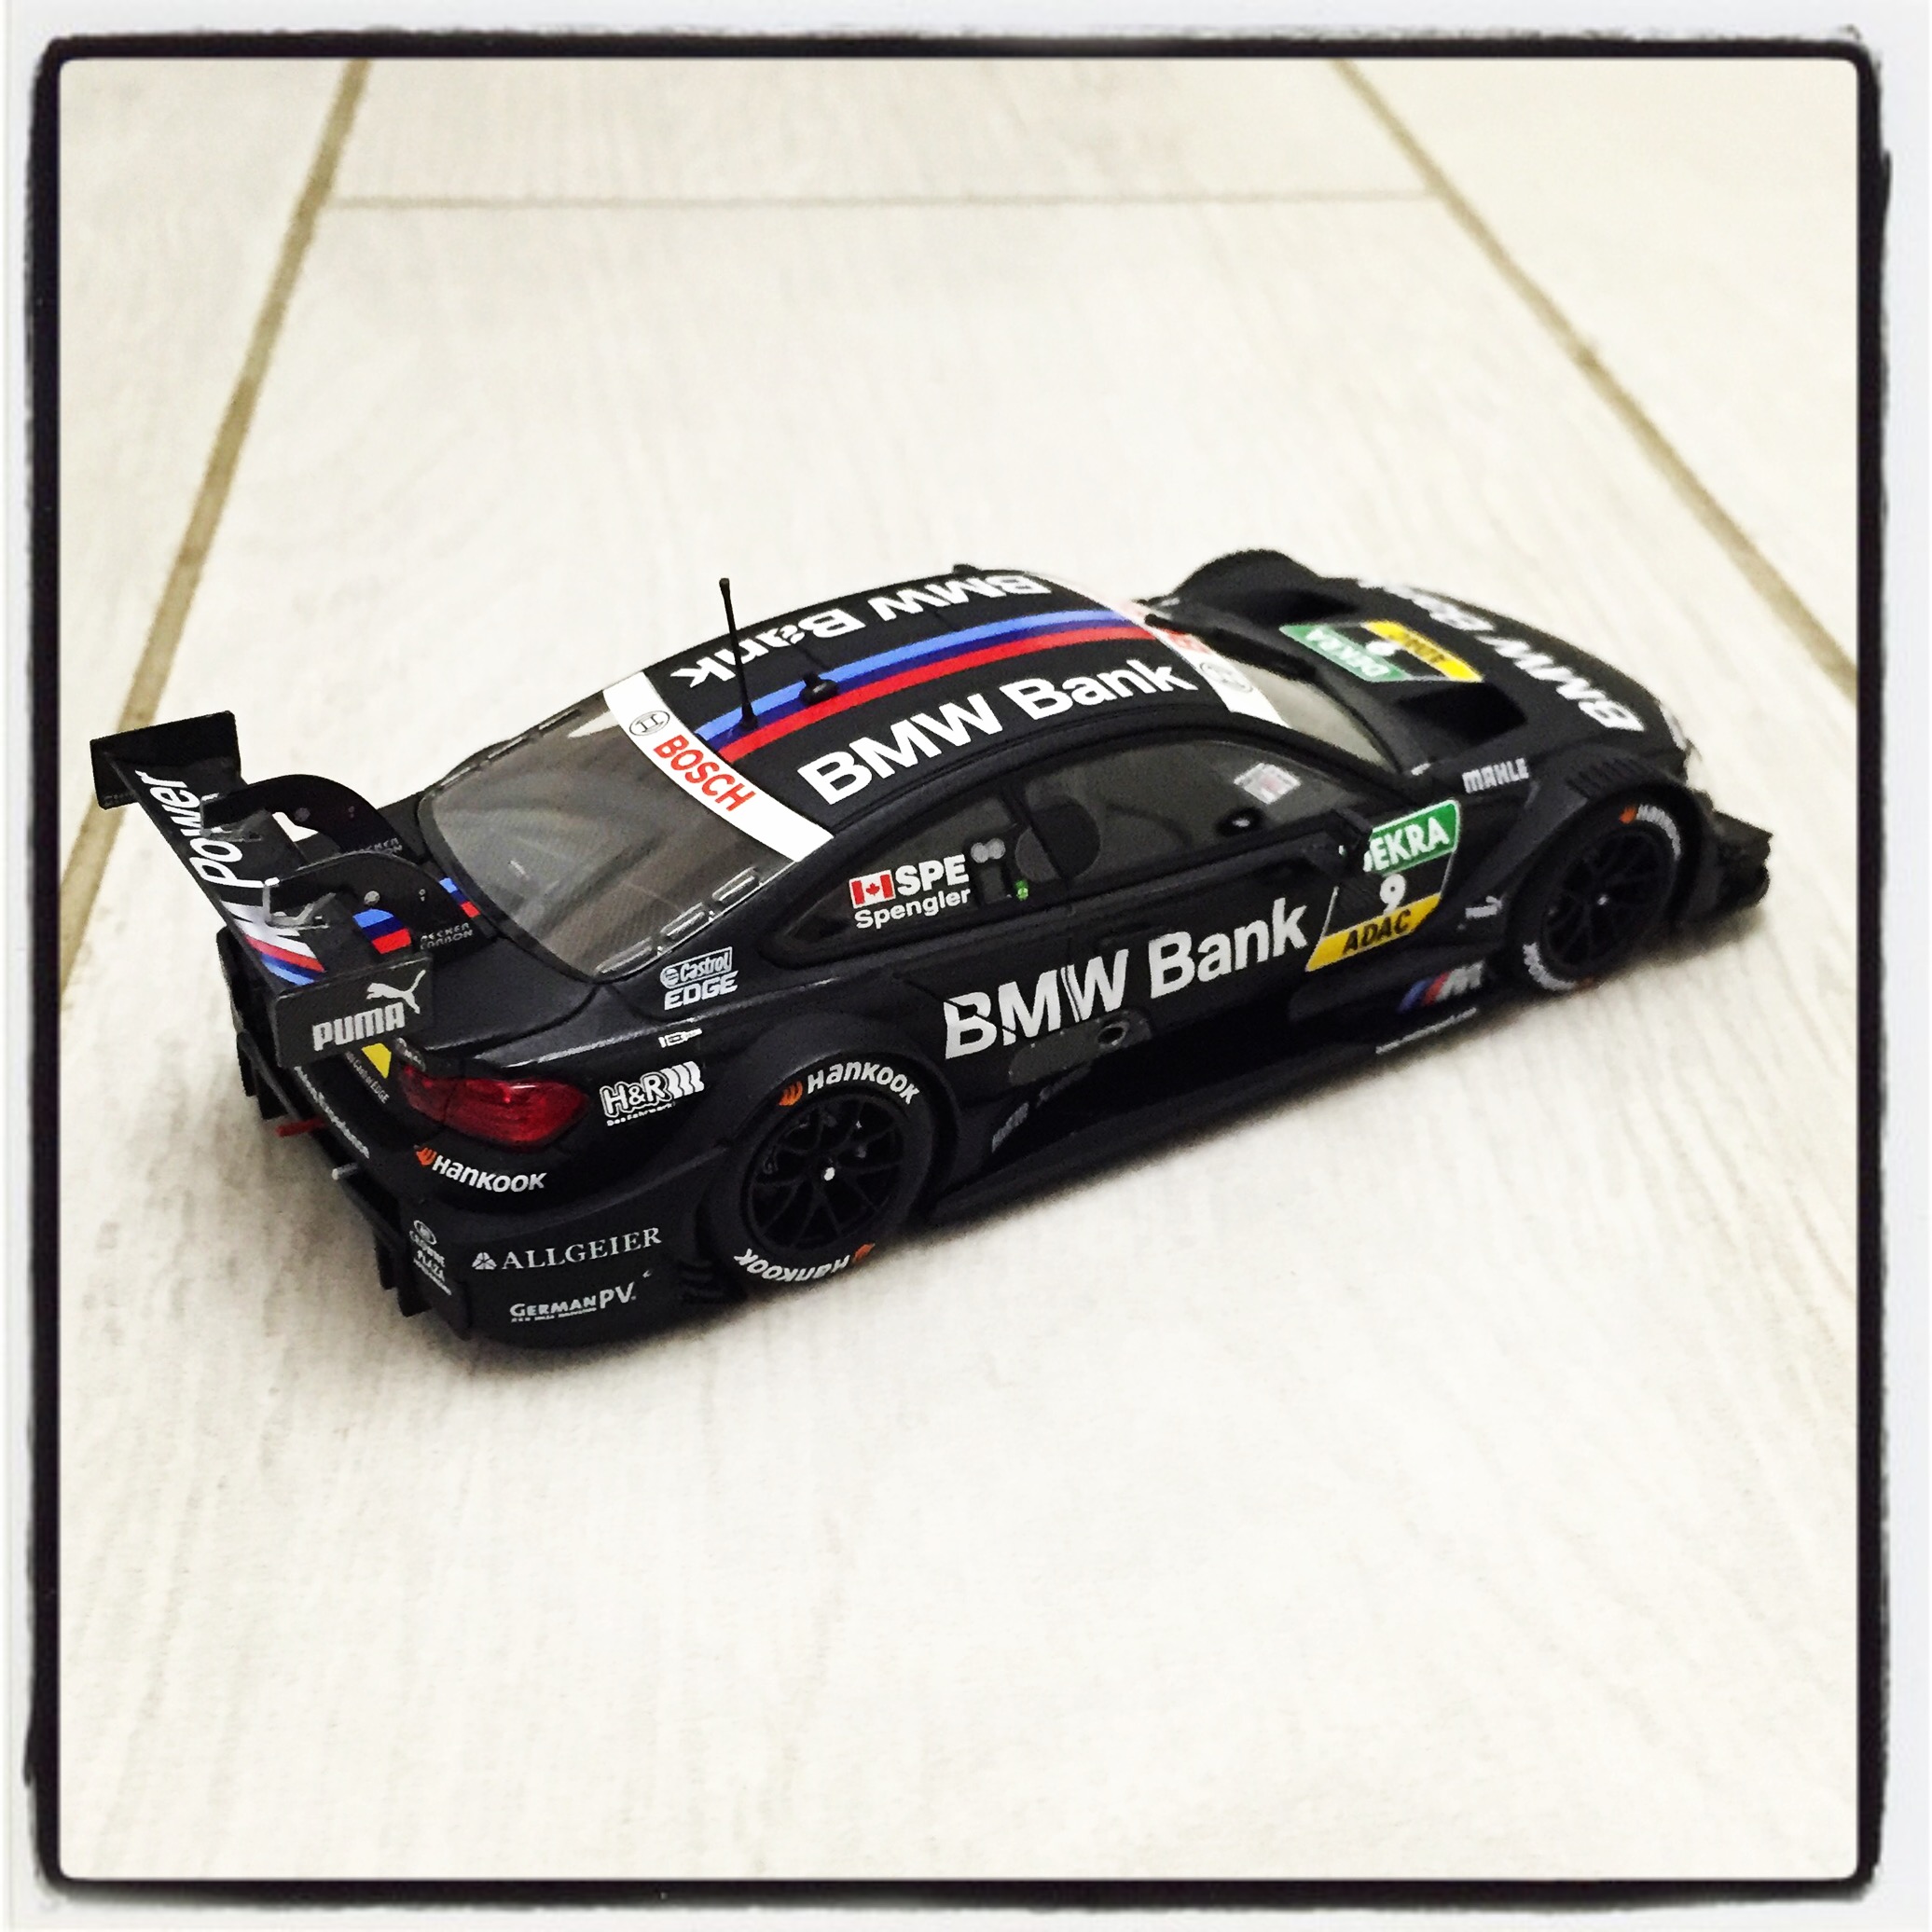 BMW M4 (F82) DTM 2014, BMW team Schnitzer, BMW Bank, #9 Bruno Spengler (minichamps)